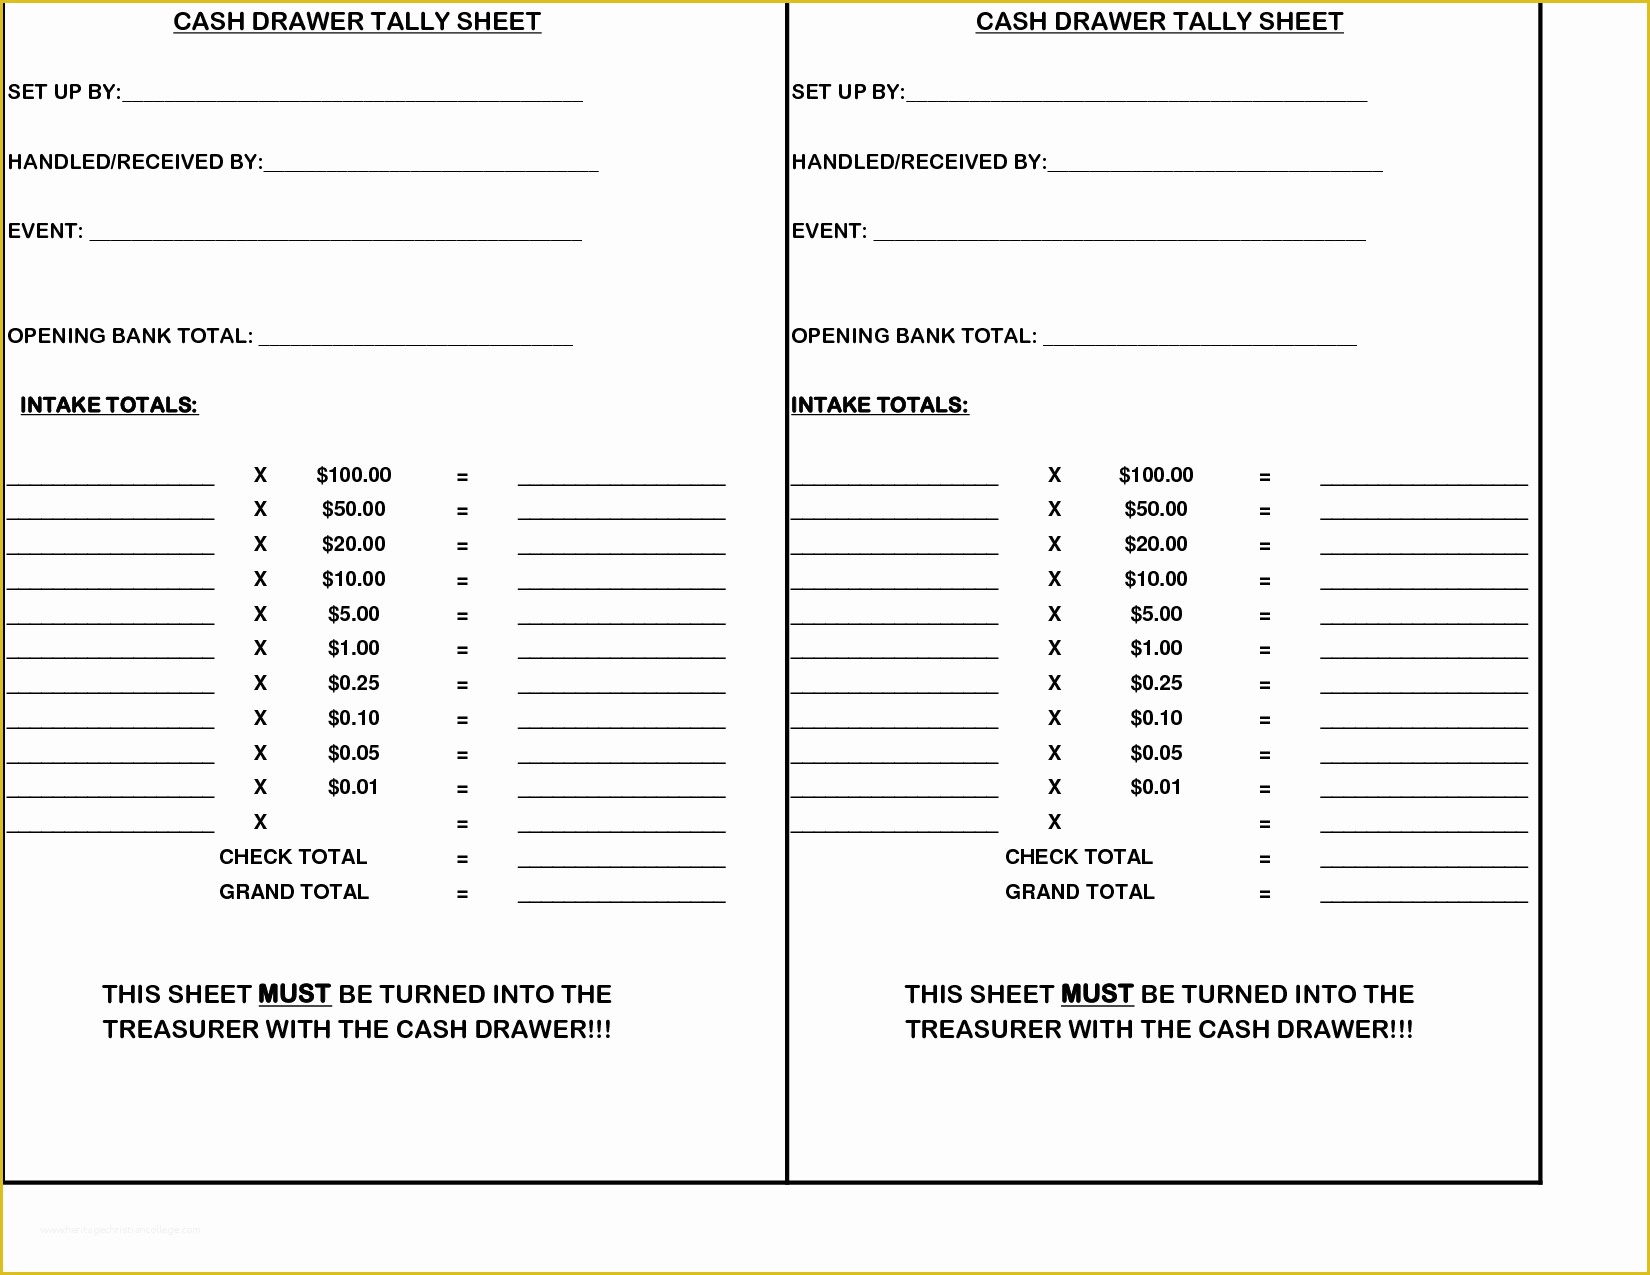 Cash Sheet Template Free Of Cash Register Till Balance Shift Sheet In Out Template